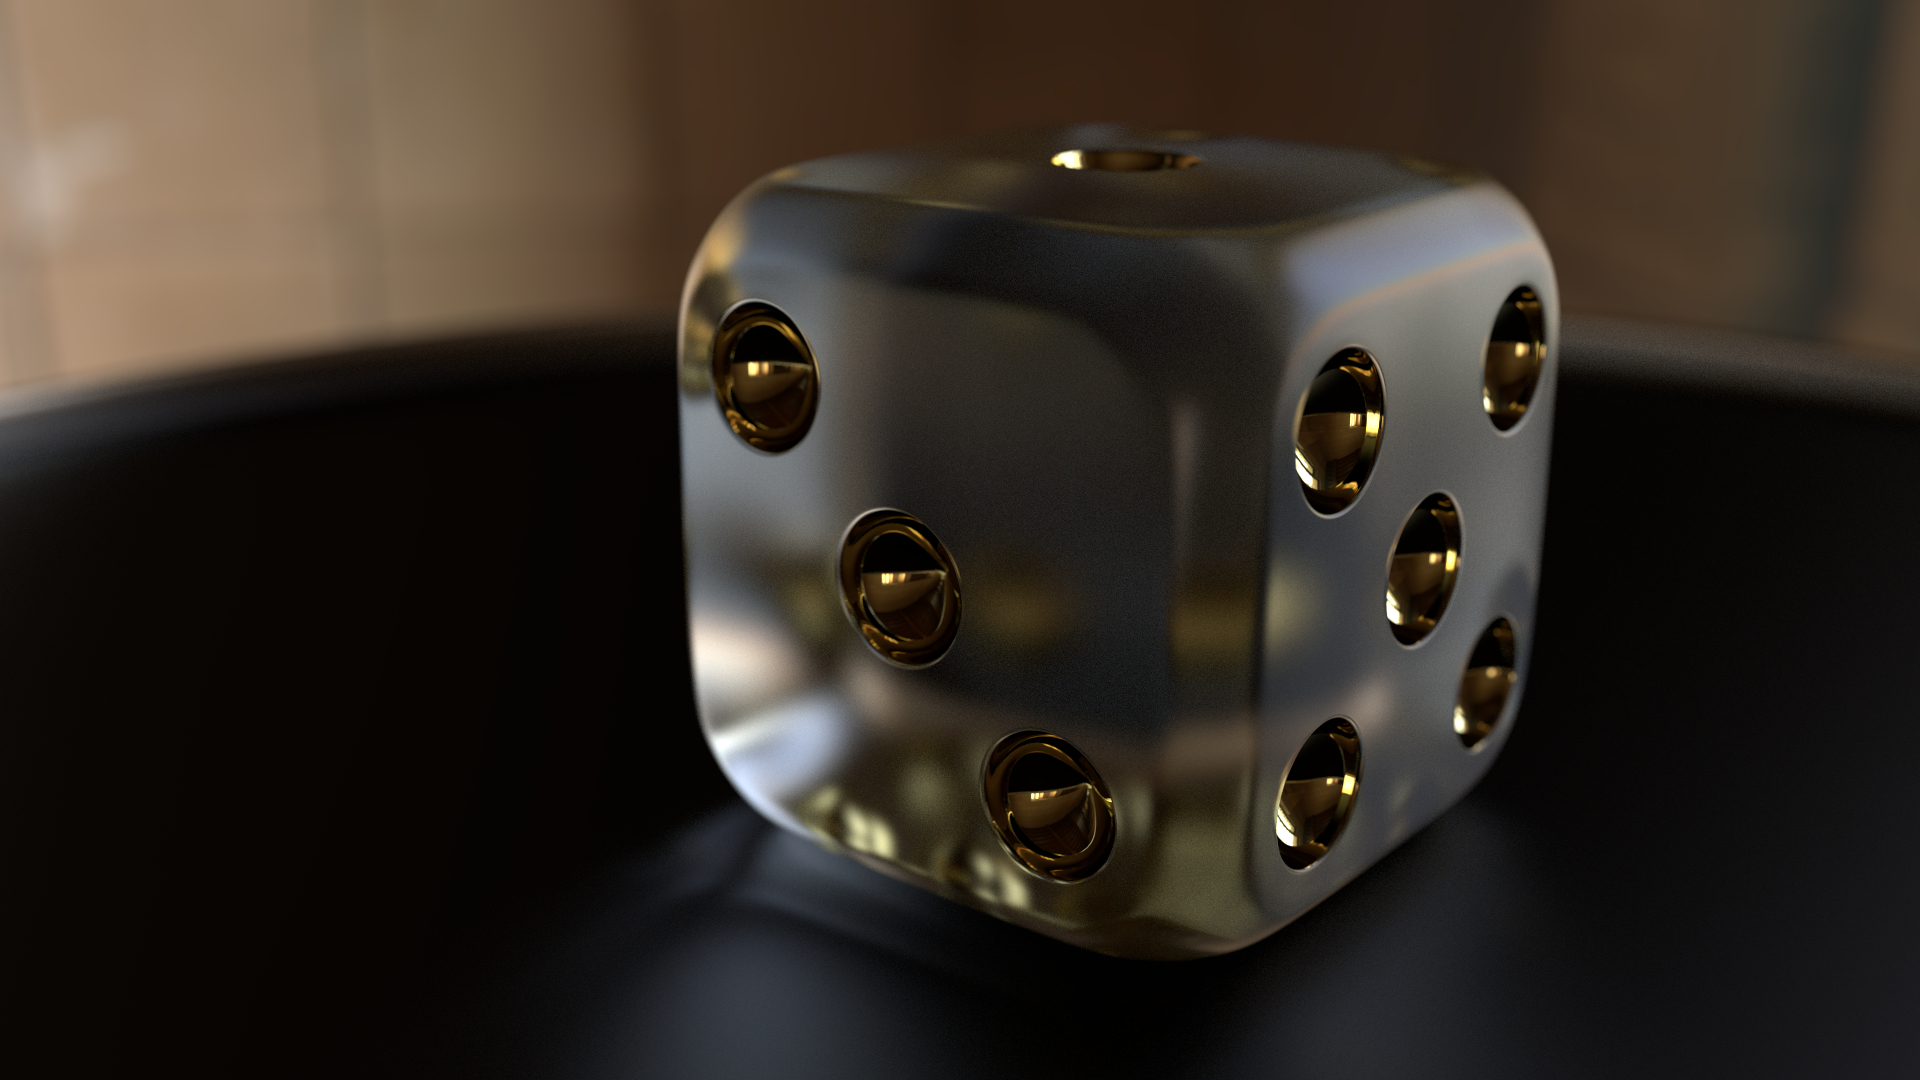 Wallpapers dice render cube on the desktop